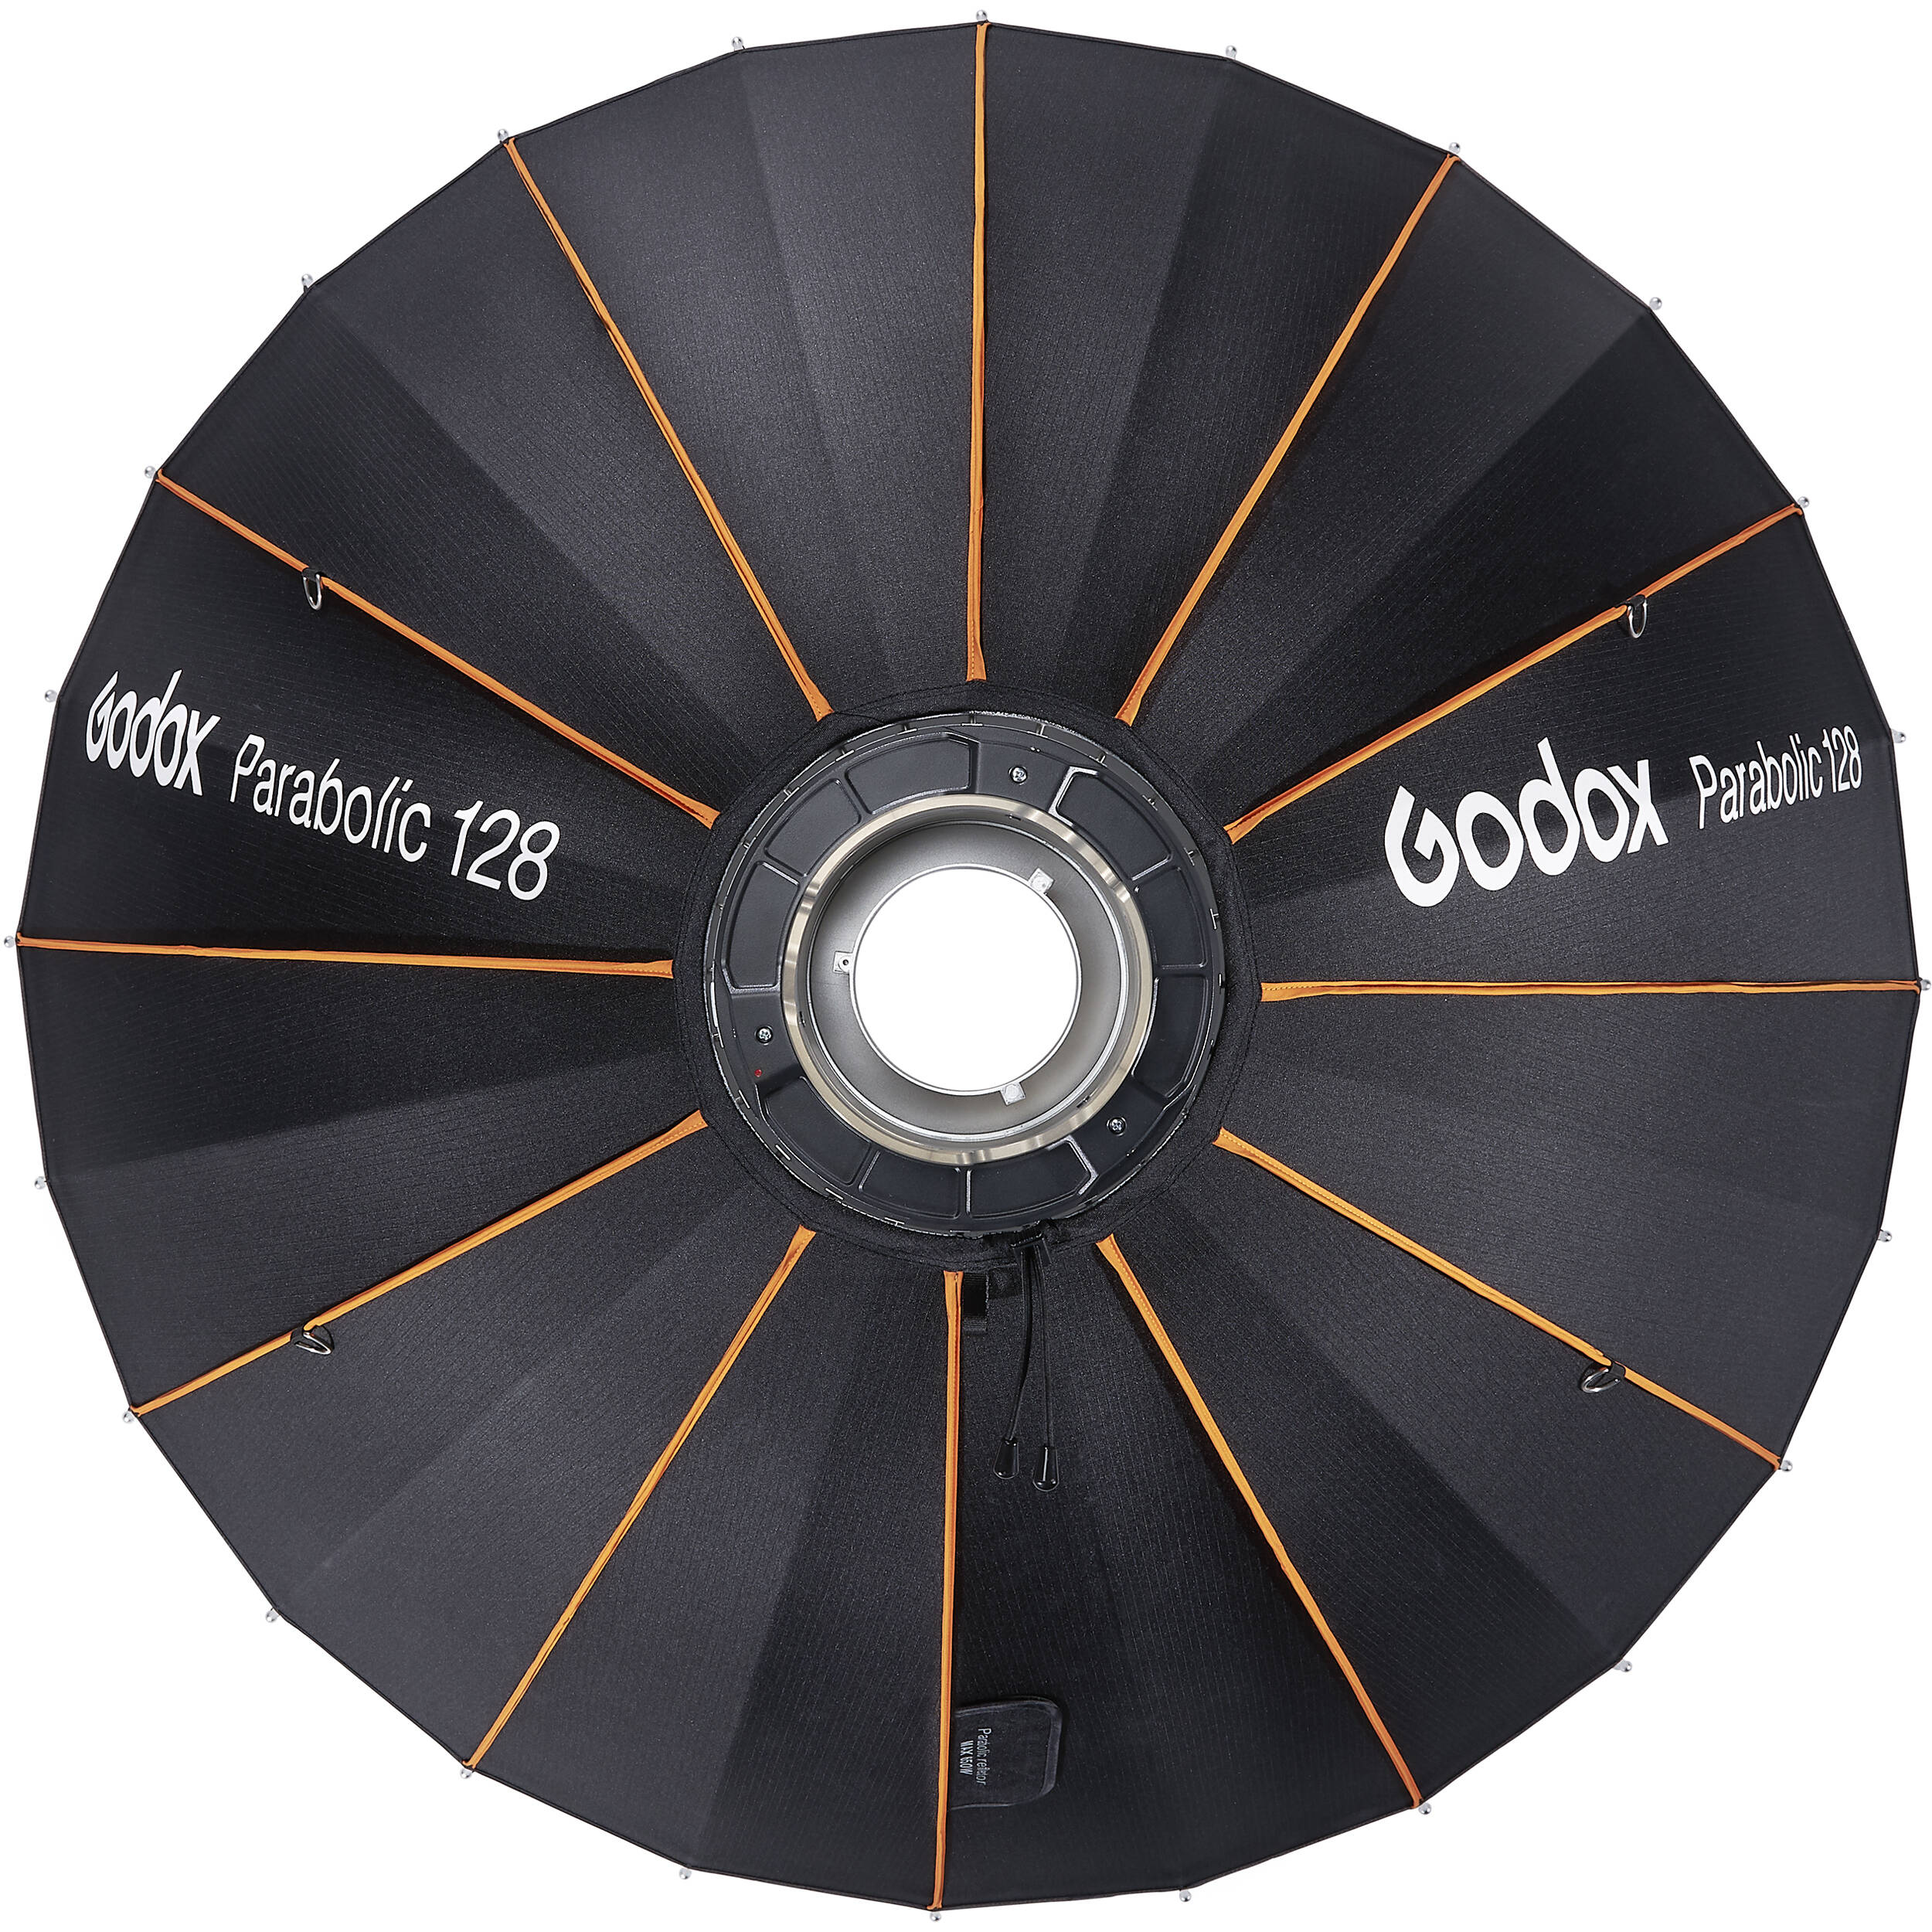    Godox Parabolic P128Kit    Ultra-mart